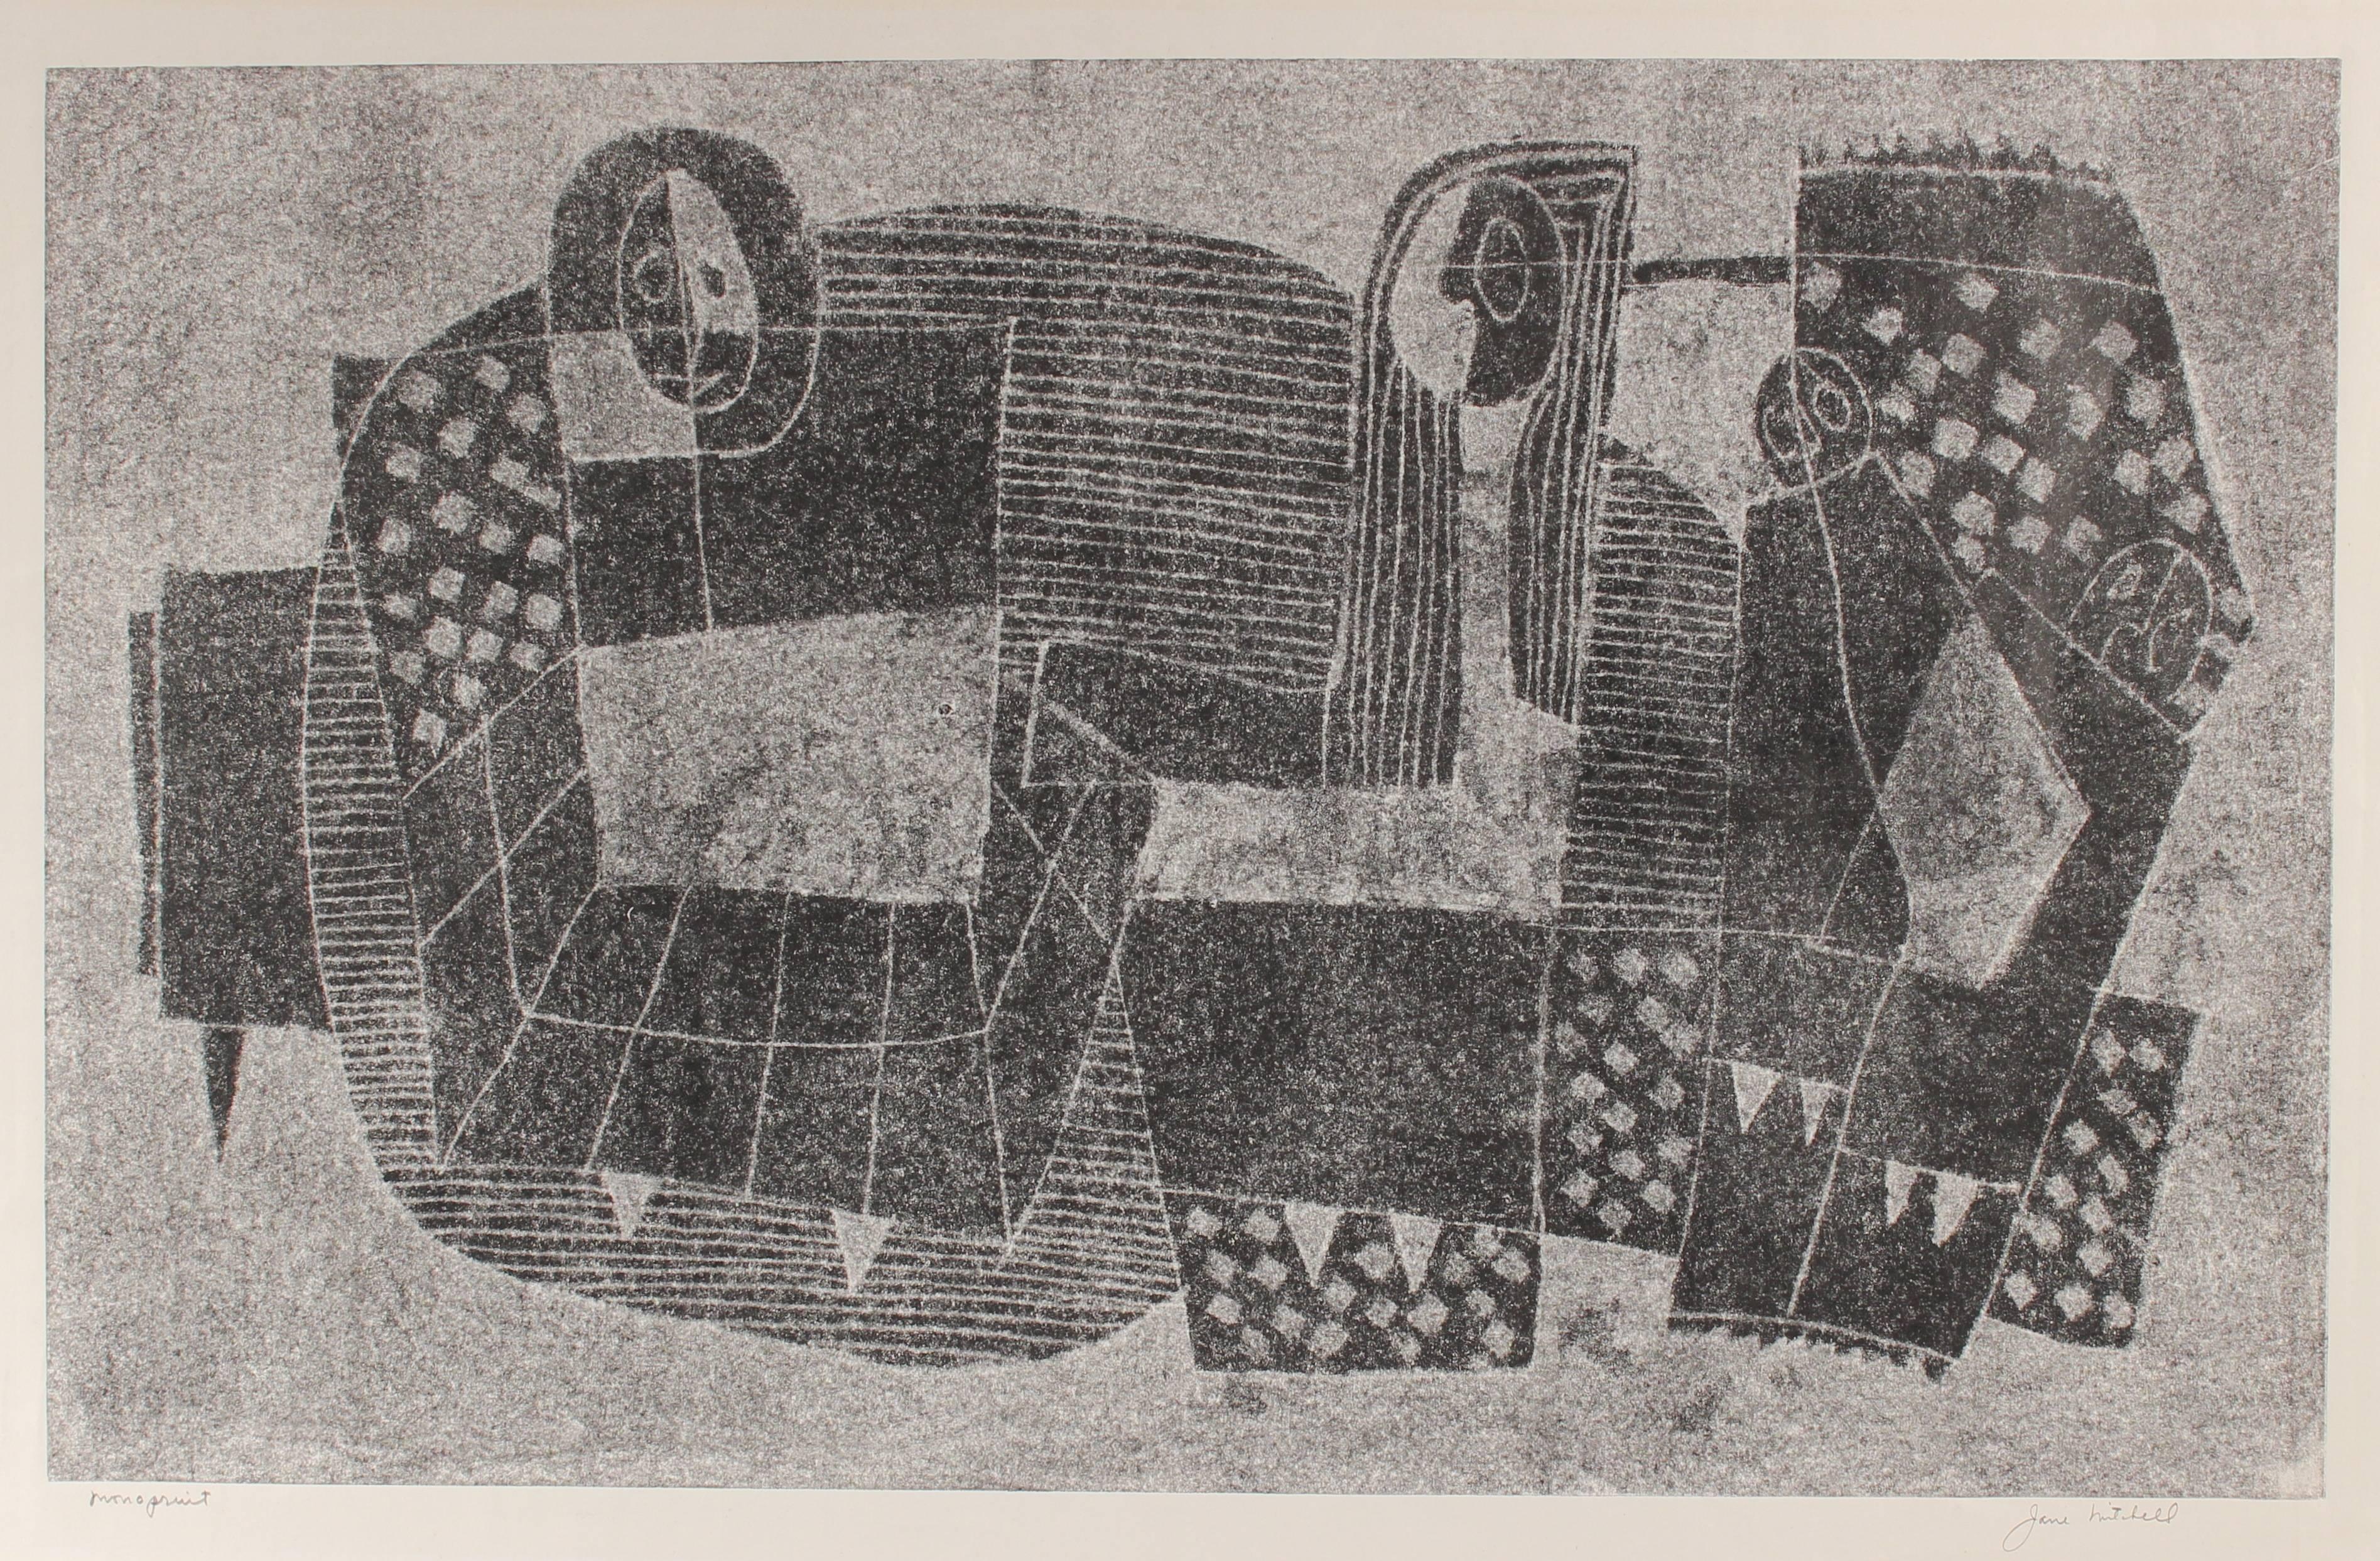 Jane Mitchell Figurative Print - Monochromatic Bauhaus Cubist Figures, Monotype Print on Paper, Circa 1970s